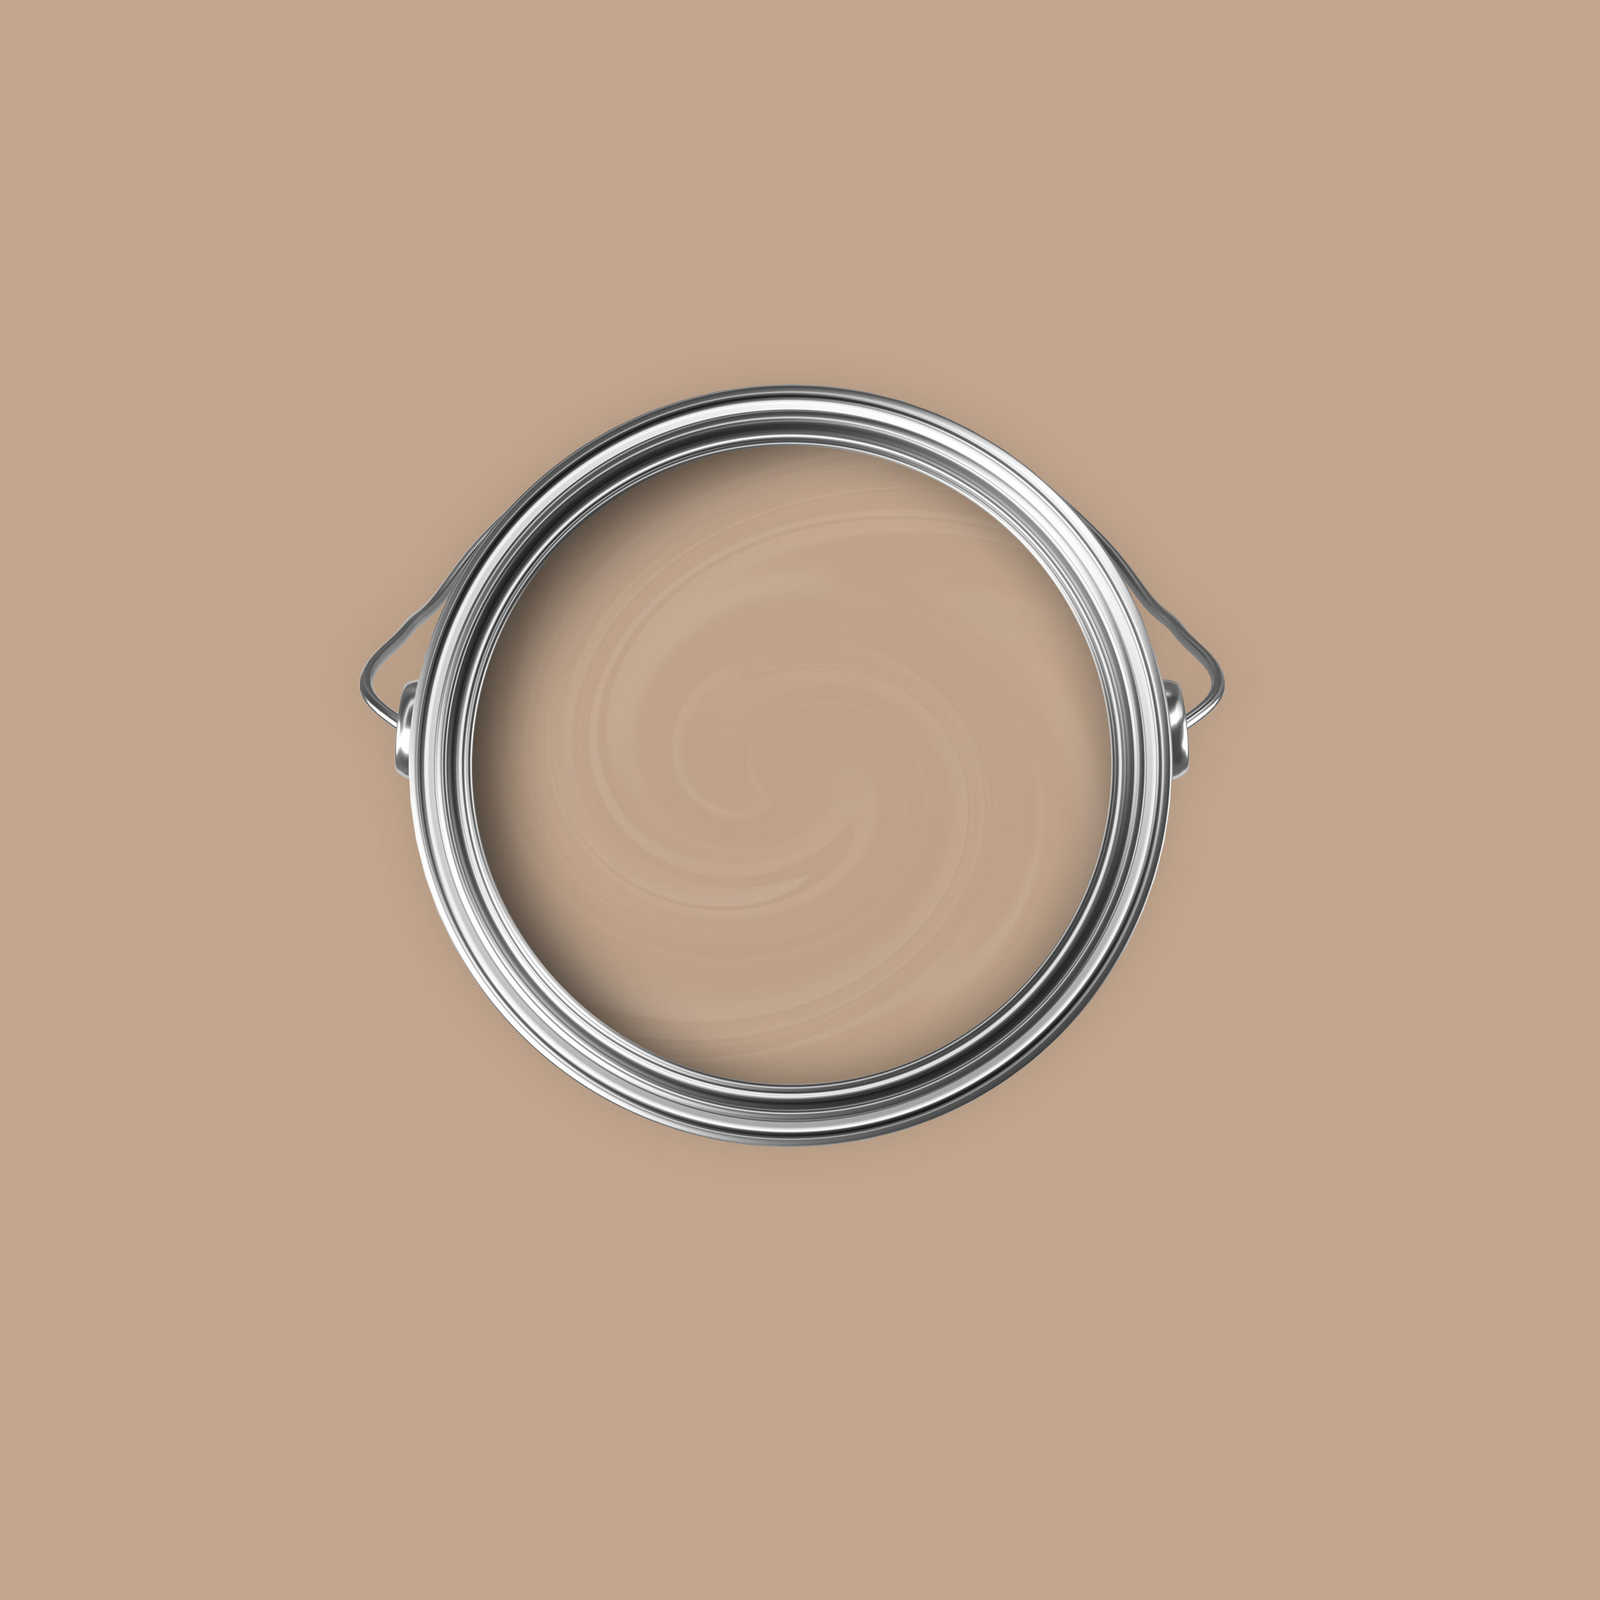             Premium Wall Paint warm light brown »Modern Mud« NW717 – 2.5 litre
        